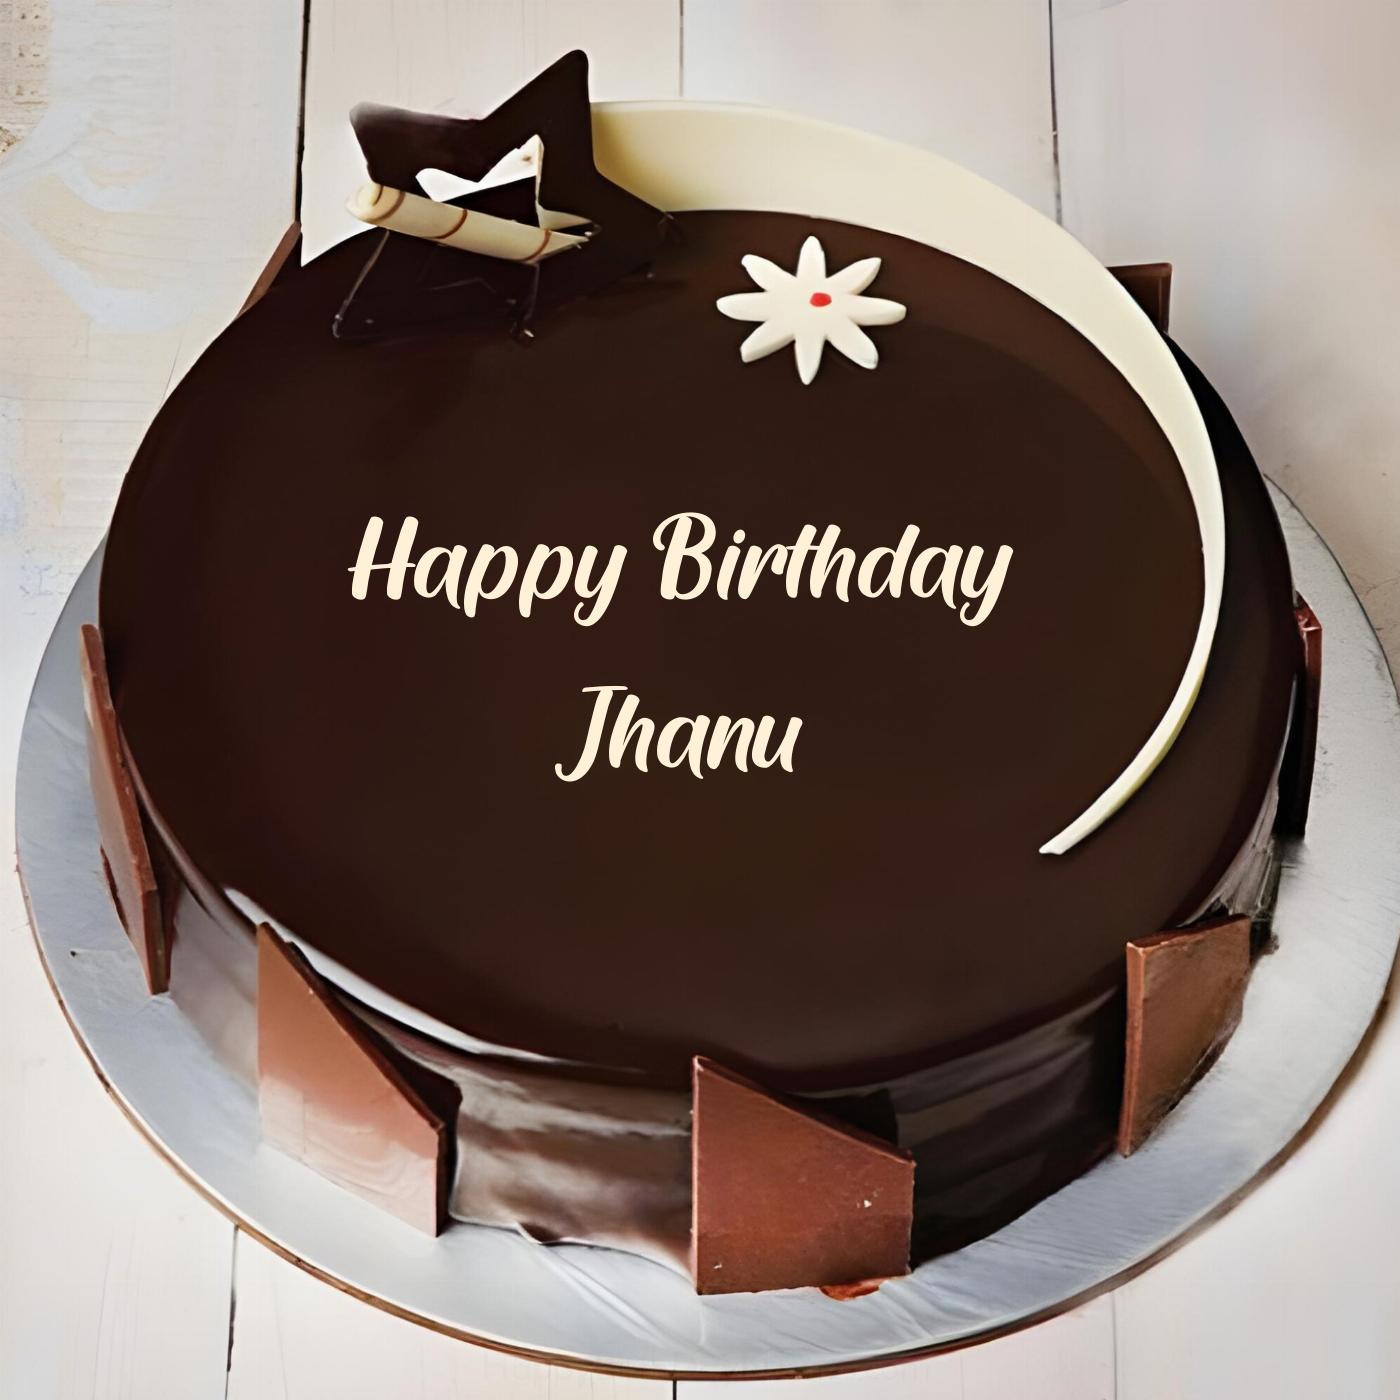 Happy Birthday Jhanu Chocolate Star Cake